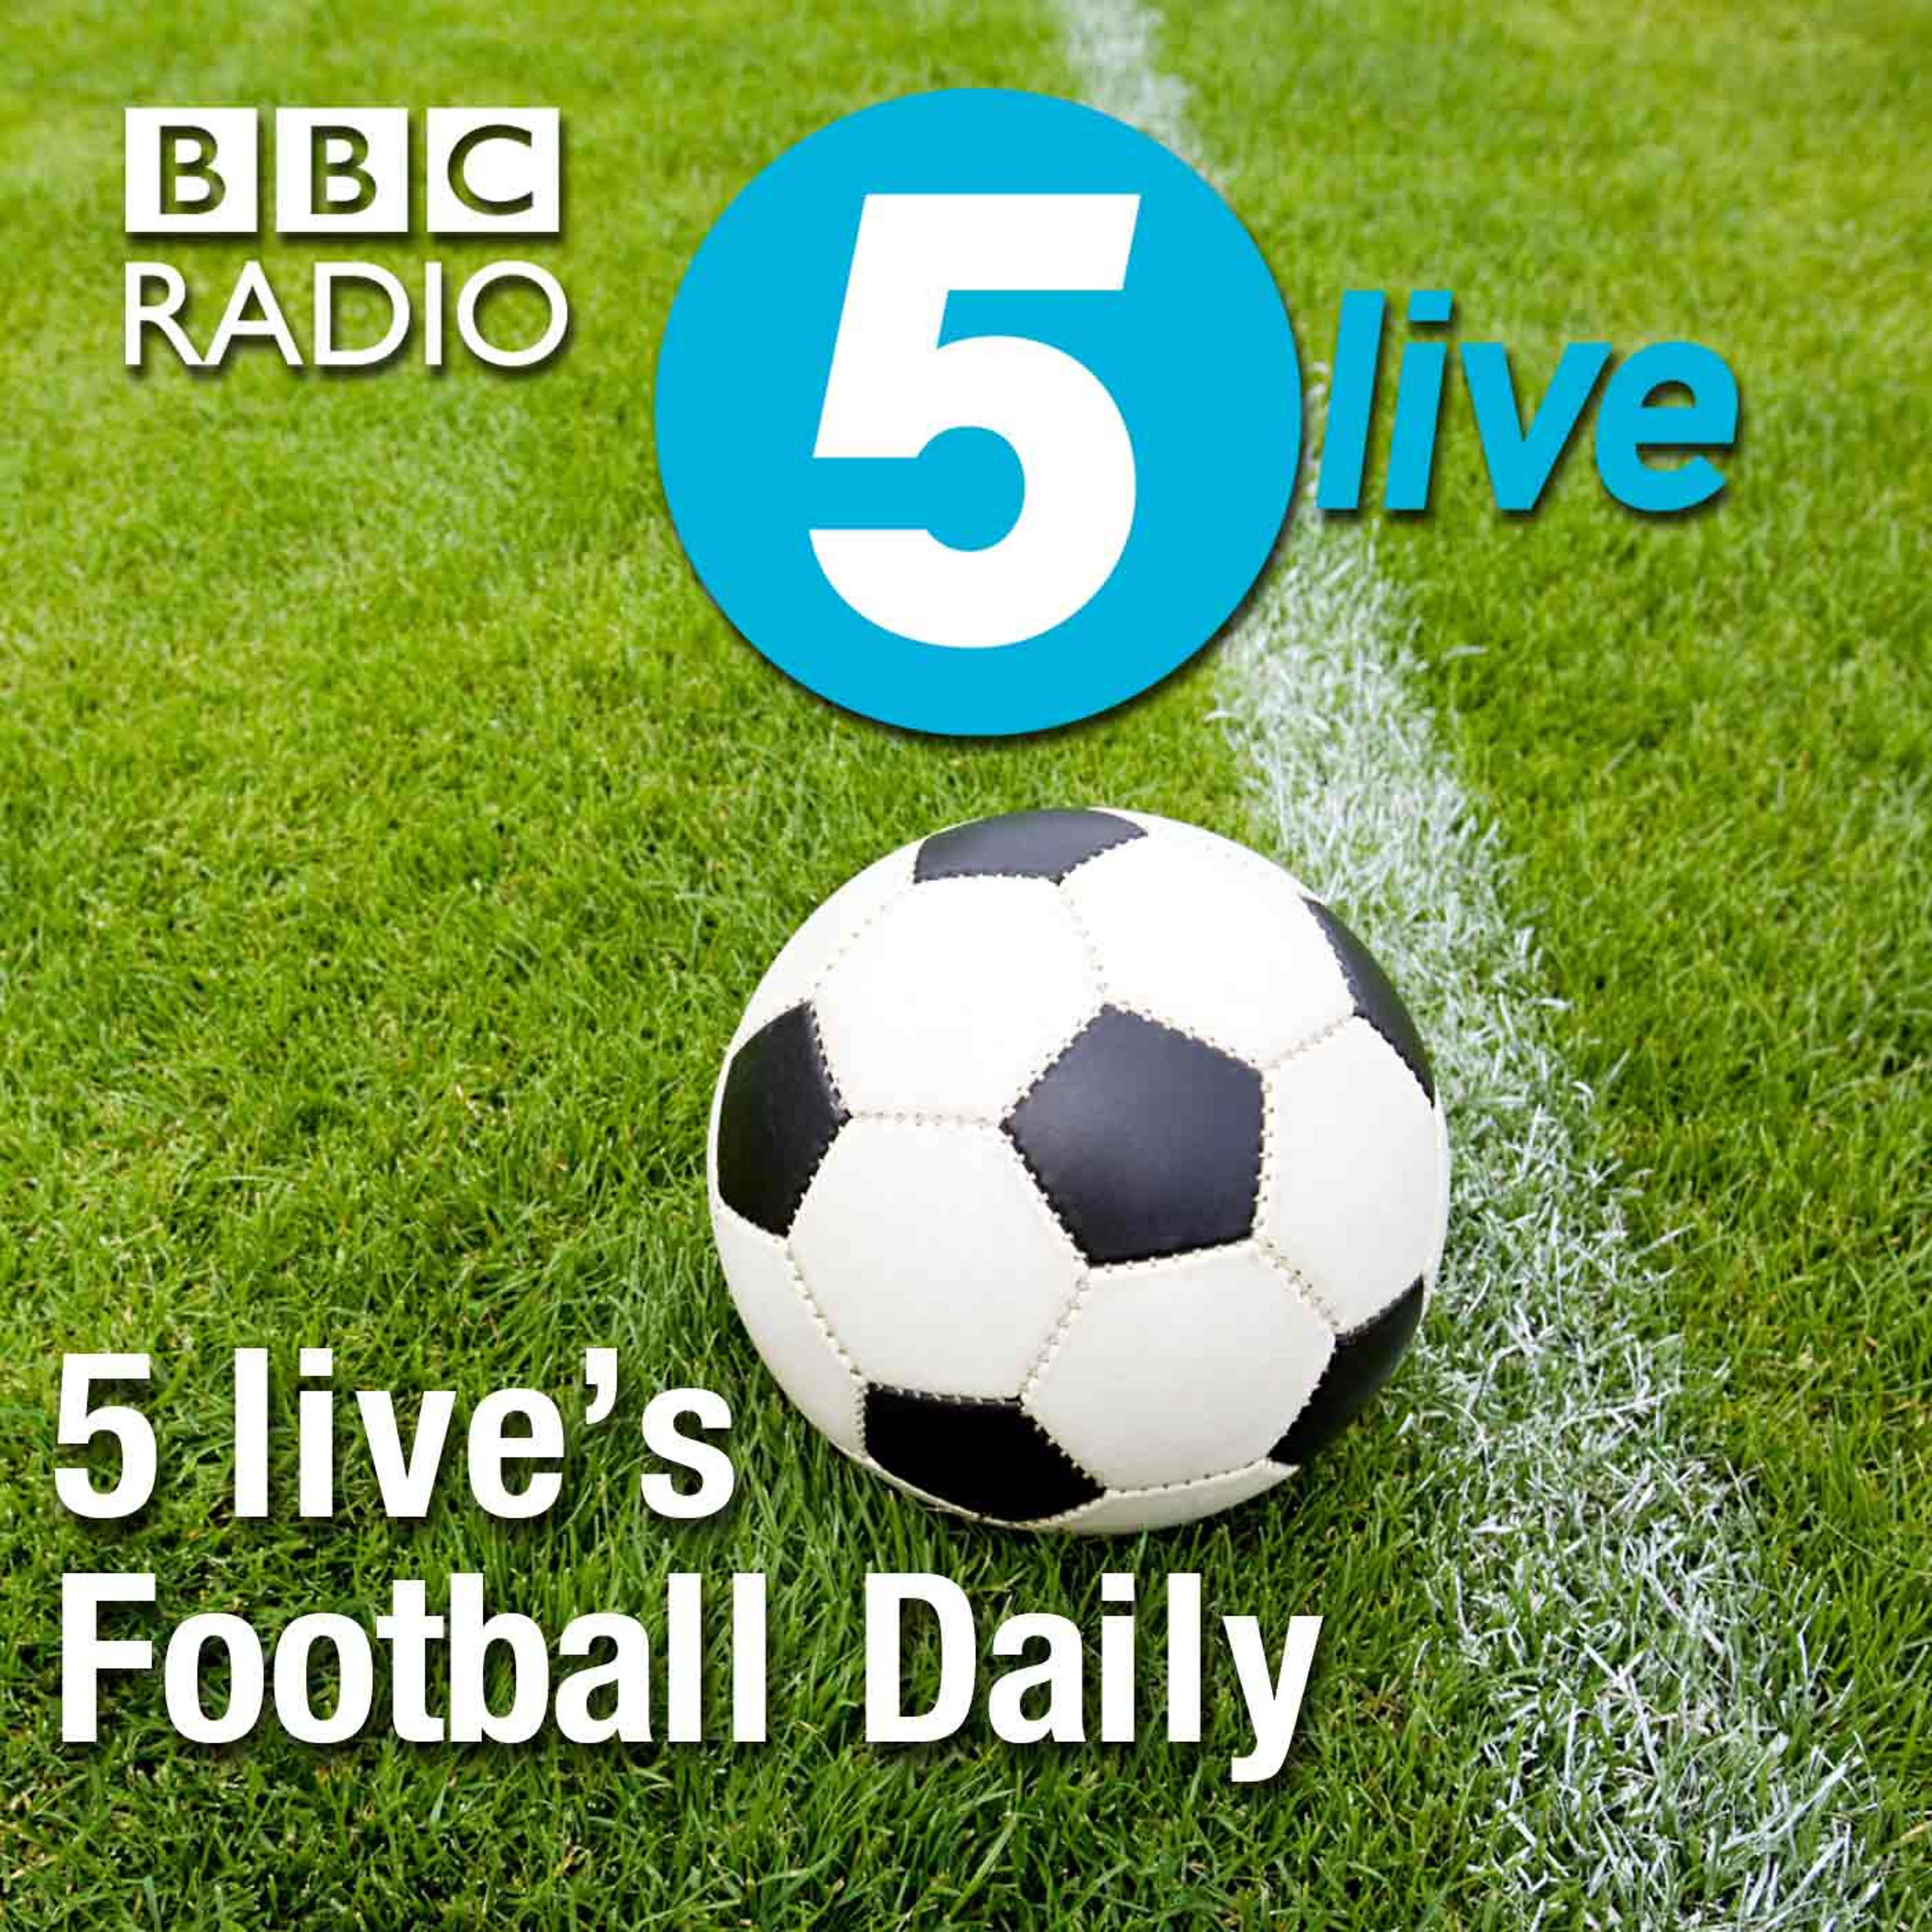 5 live's Football Daily | Listen via Stitcher Radio On Demand3000 x 3000